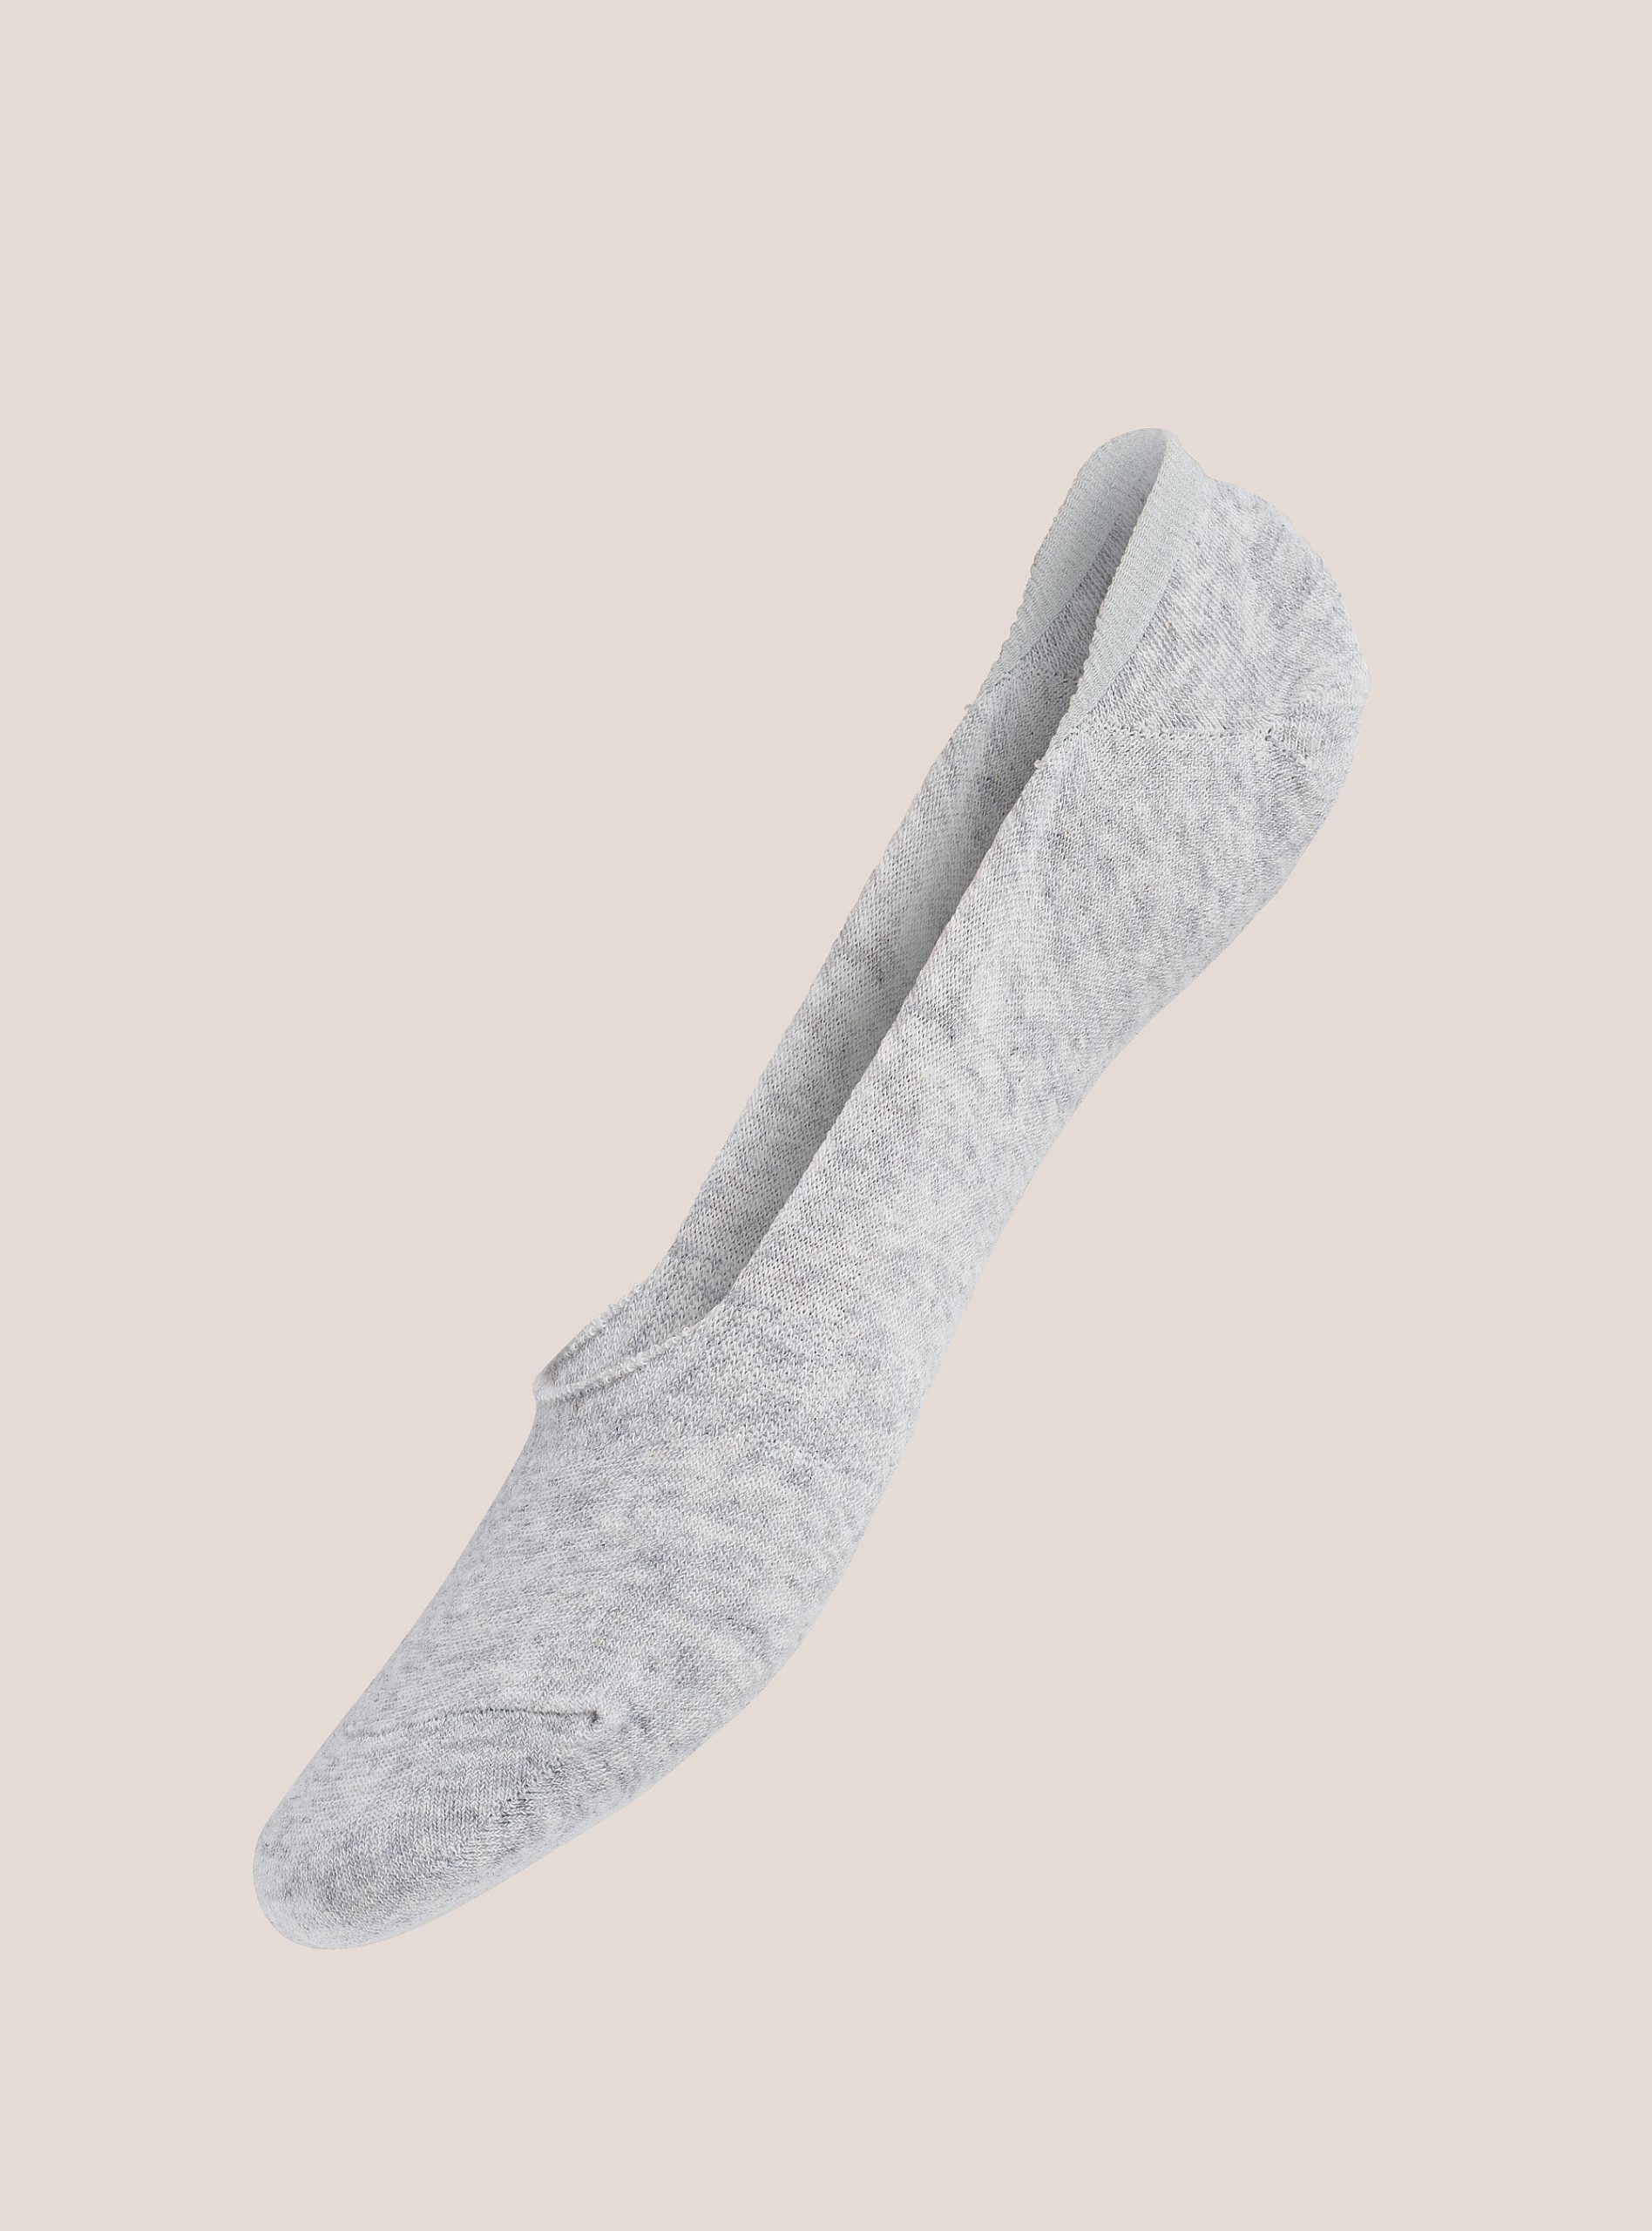 Set 3 Pairs Of Footsies Socks C150 Grey M Frauen Socken Alcott Empfehlen – 1